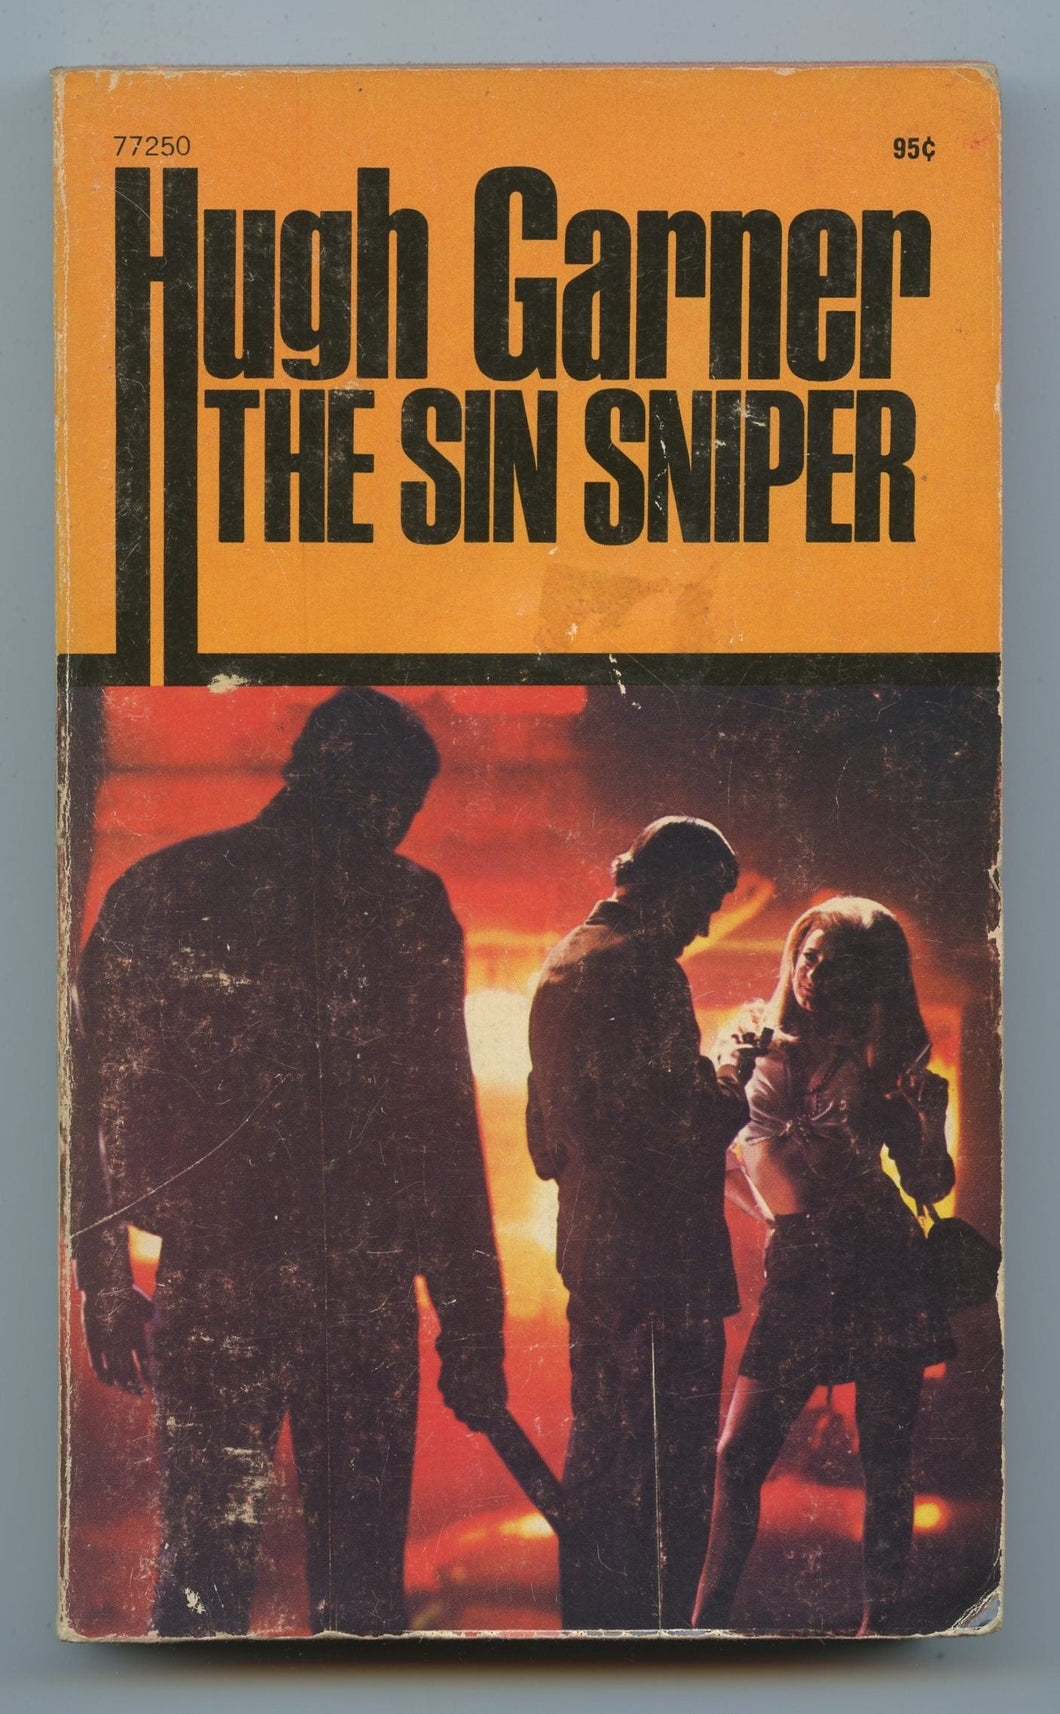 The Sin Sniper